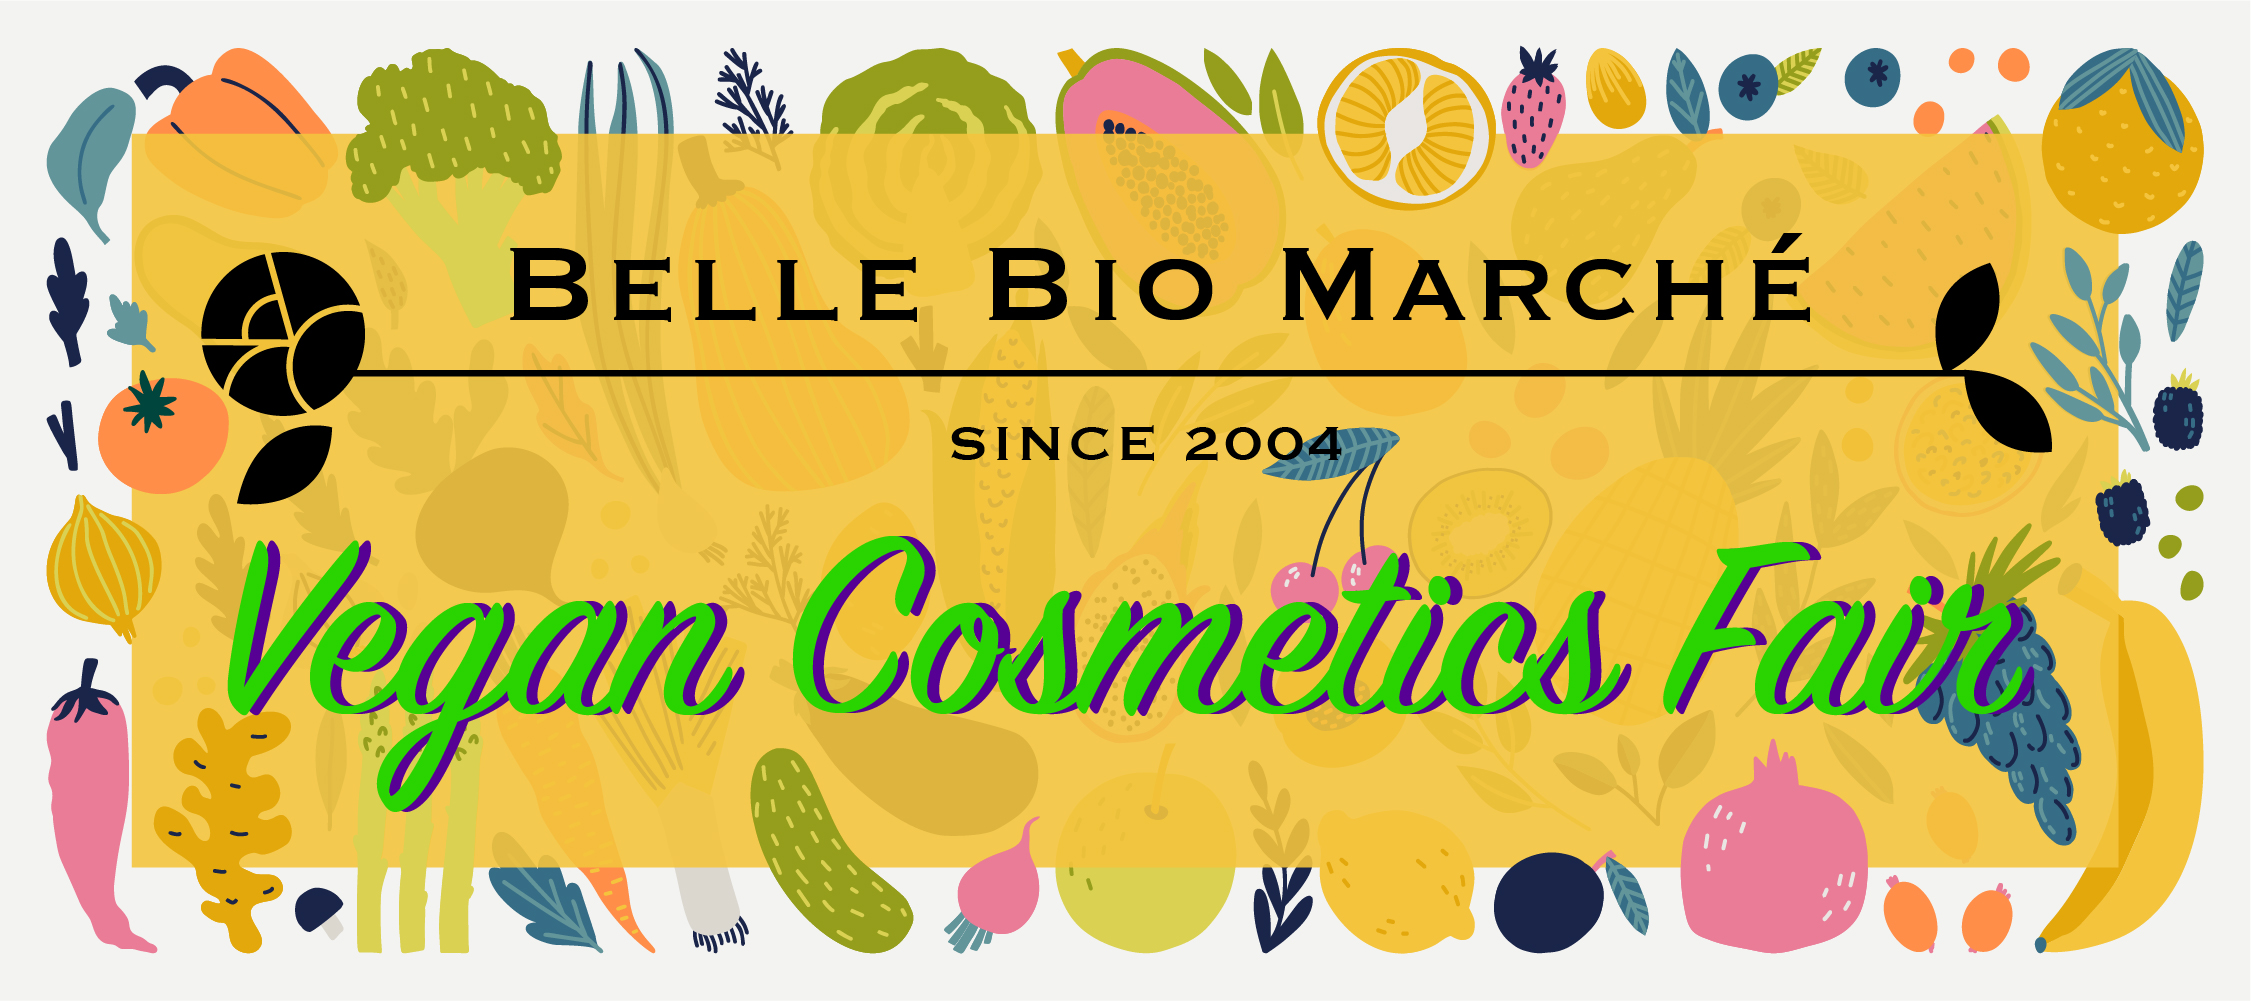 Belle Bio Marche Vegan Cosmetic Fair